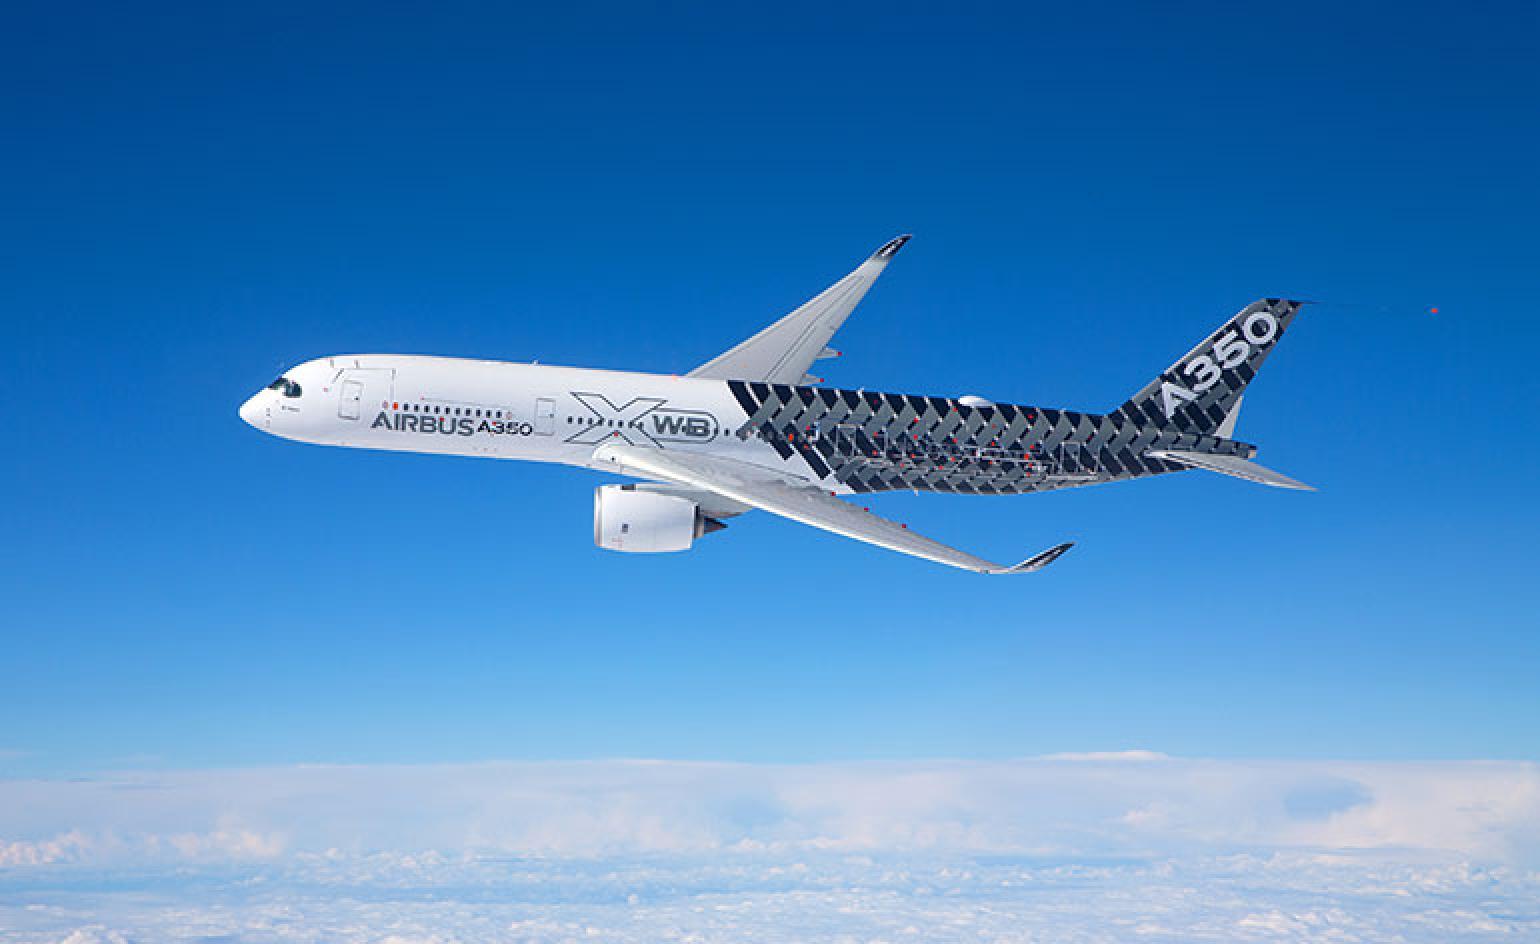 Wallpaper* and Airbus: flights of fancy. Wallpaper*